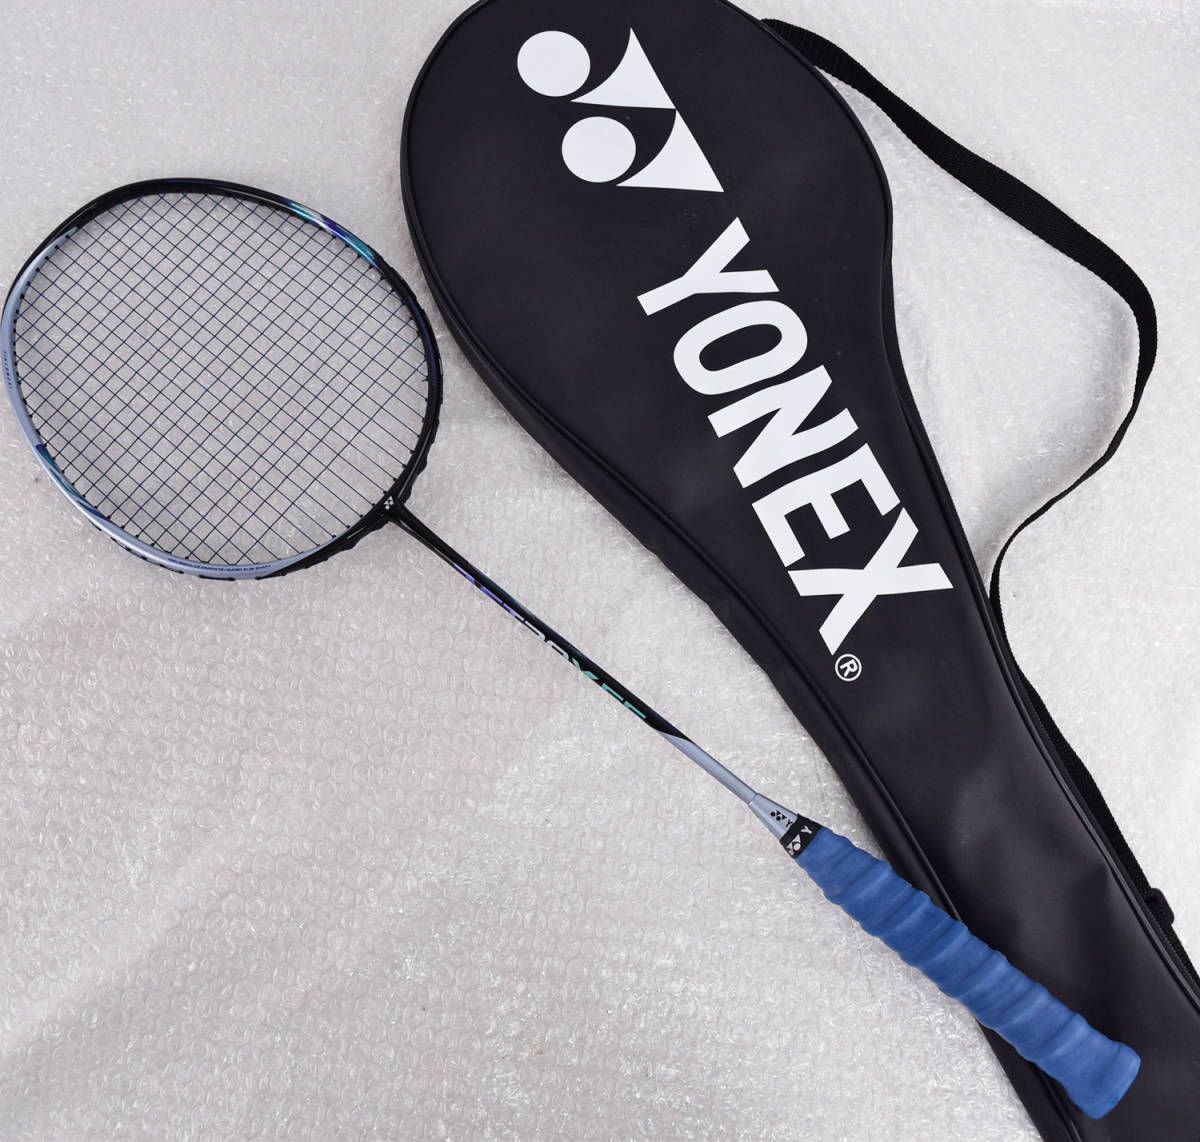 Best Badminton Racket under 2000 - Yonex Muscle Power 29 Light